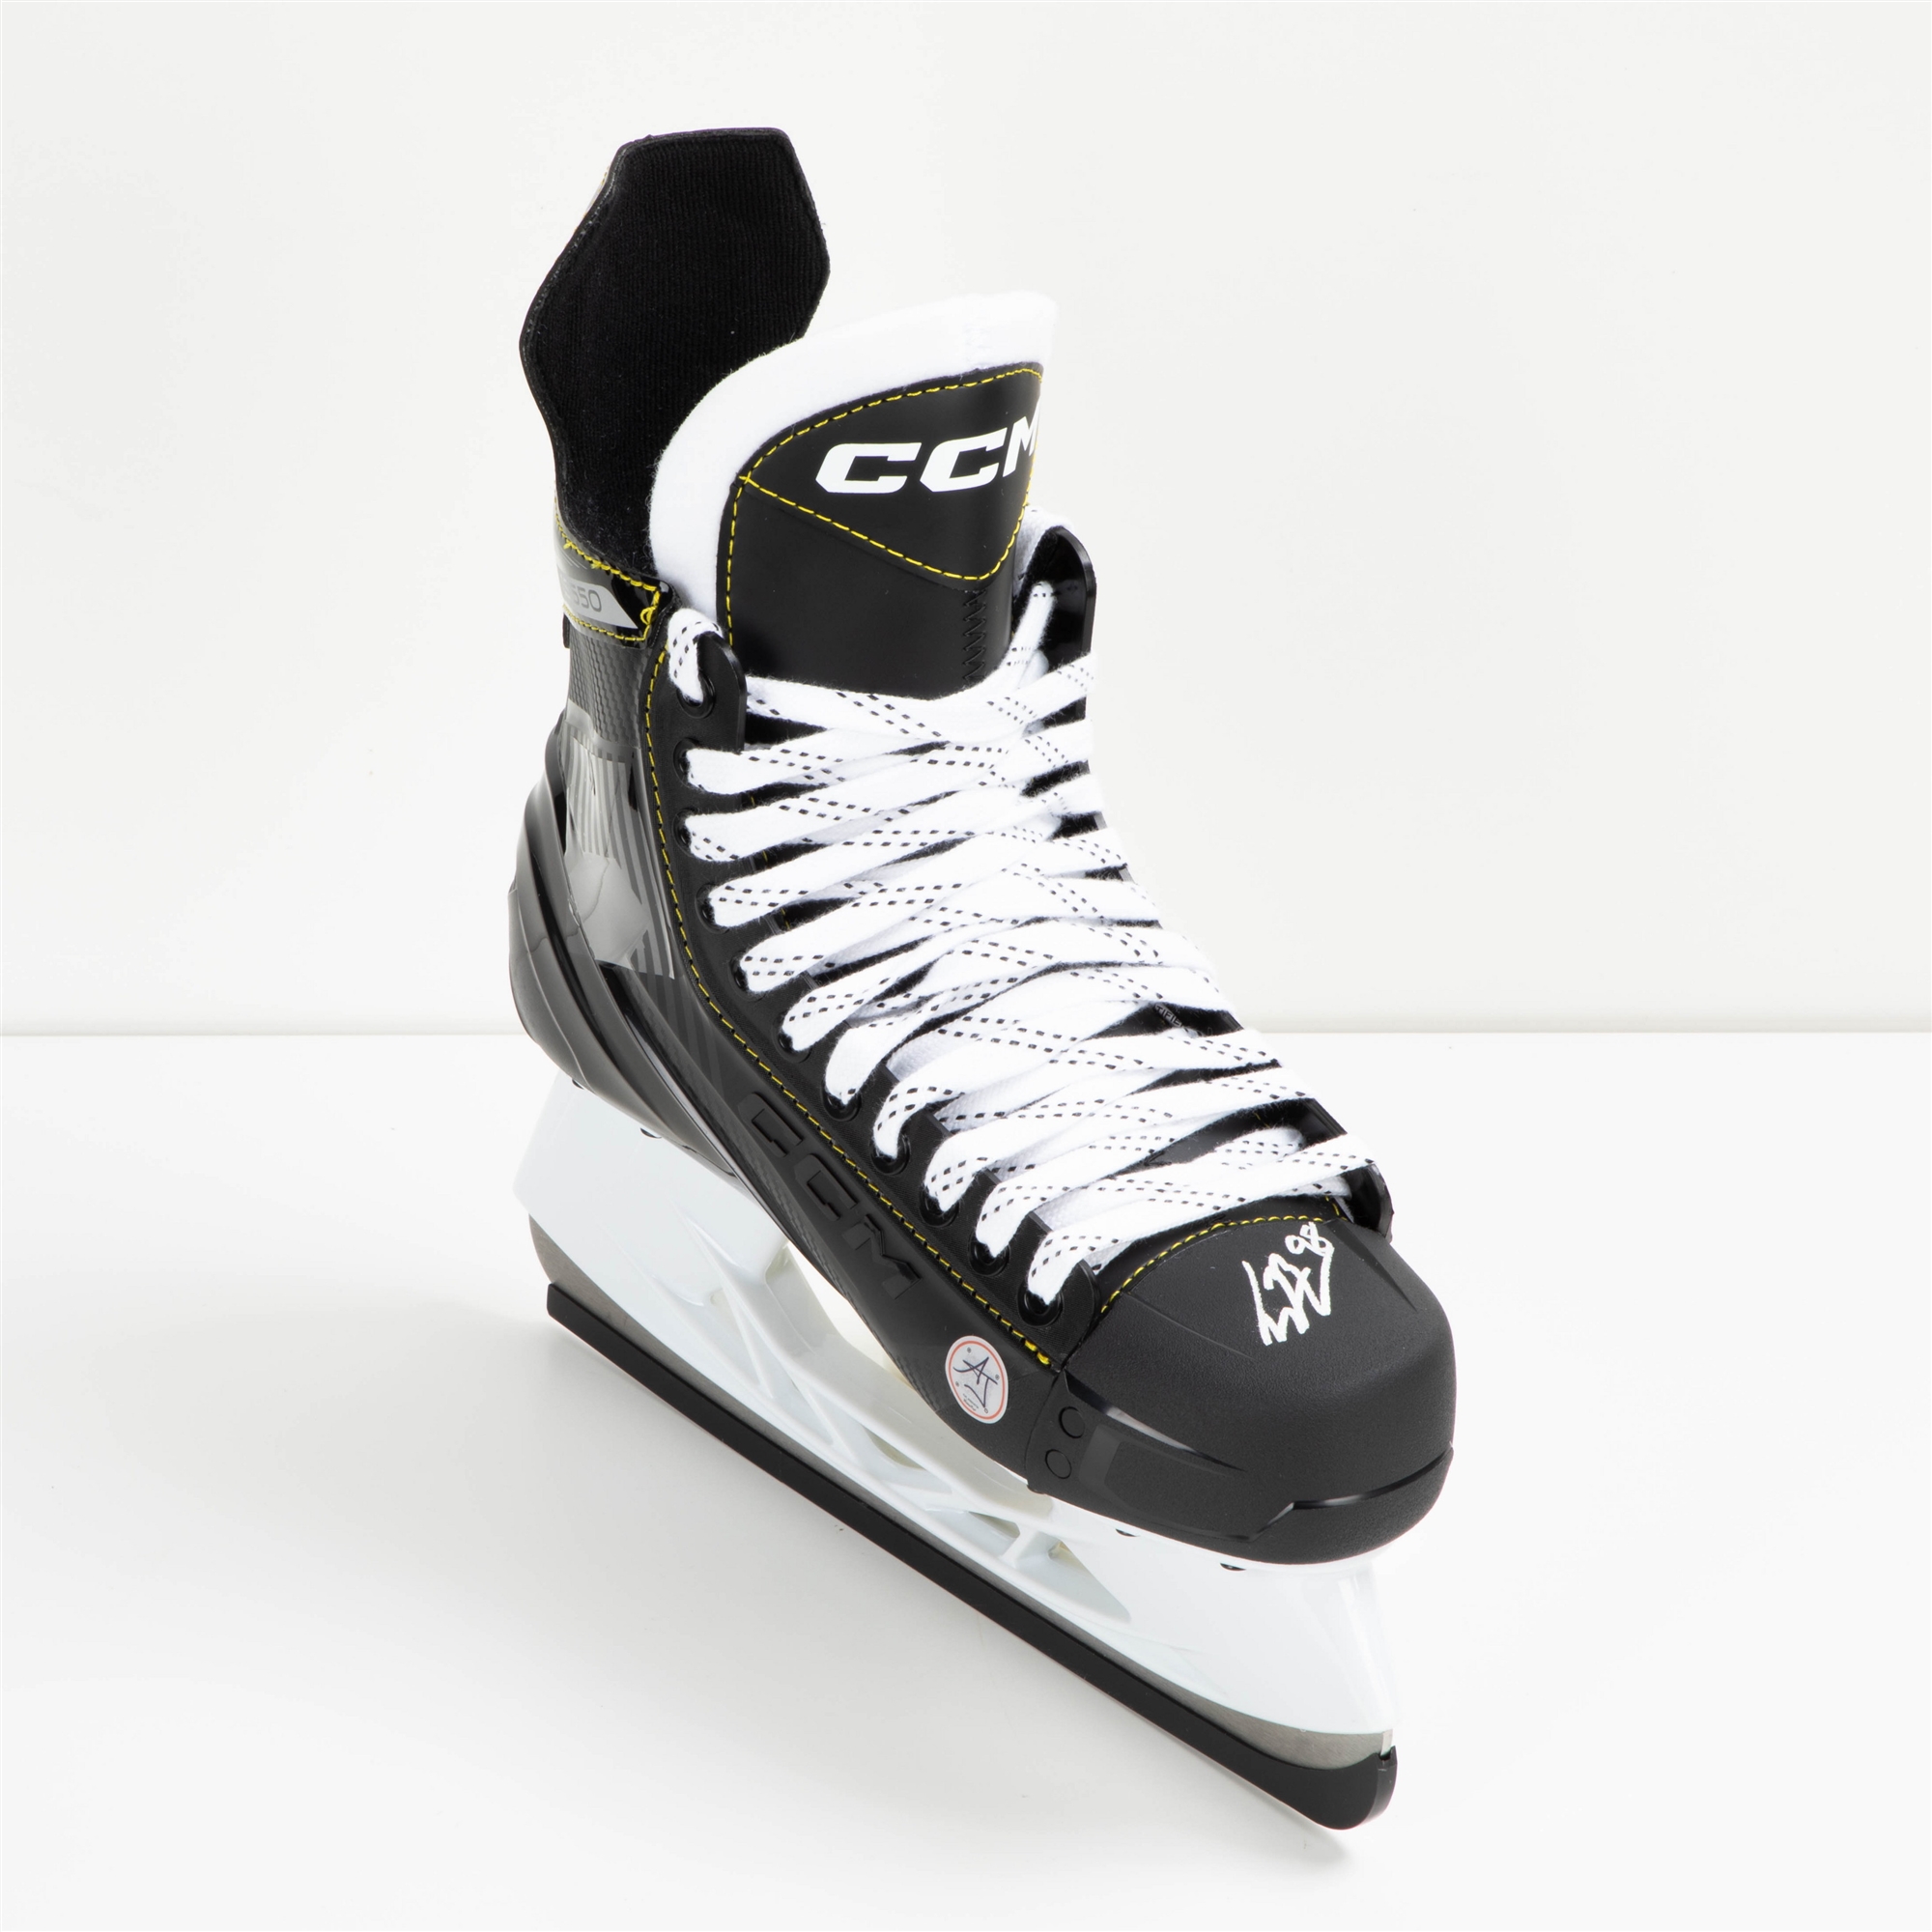 Connor Bedard Autographed CCM Tacks Black Hockey Skate